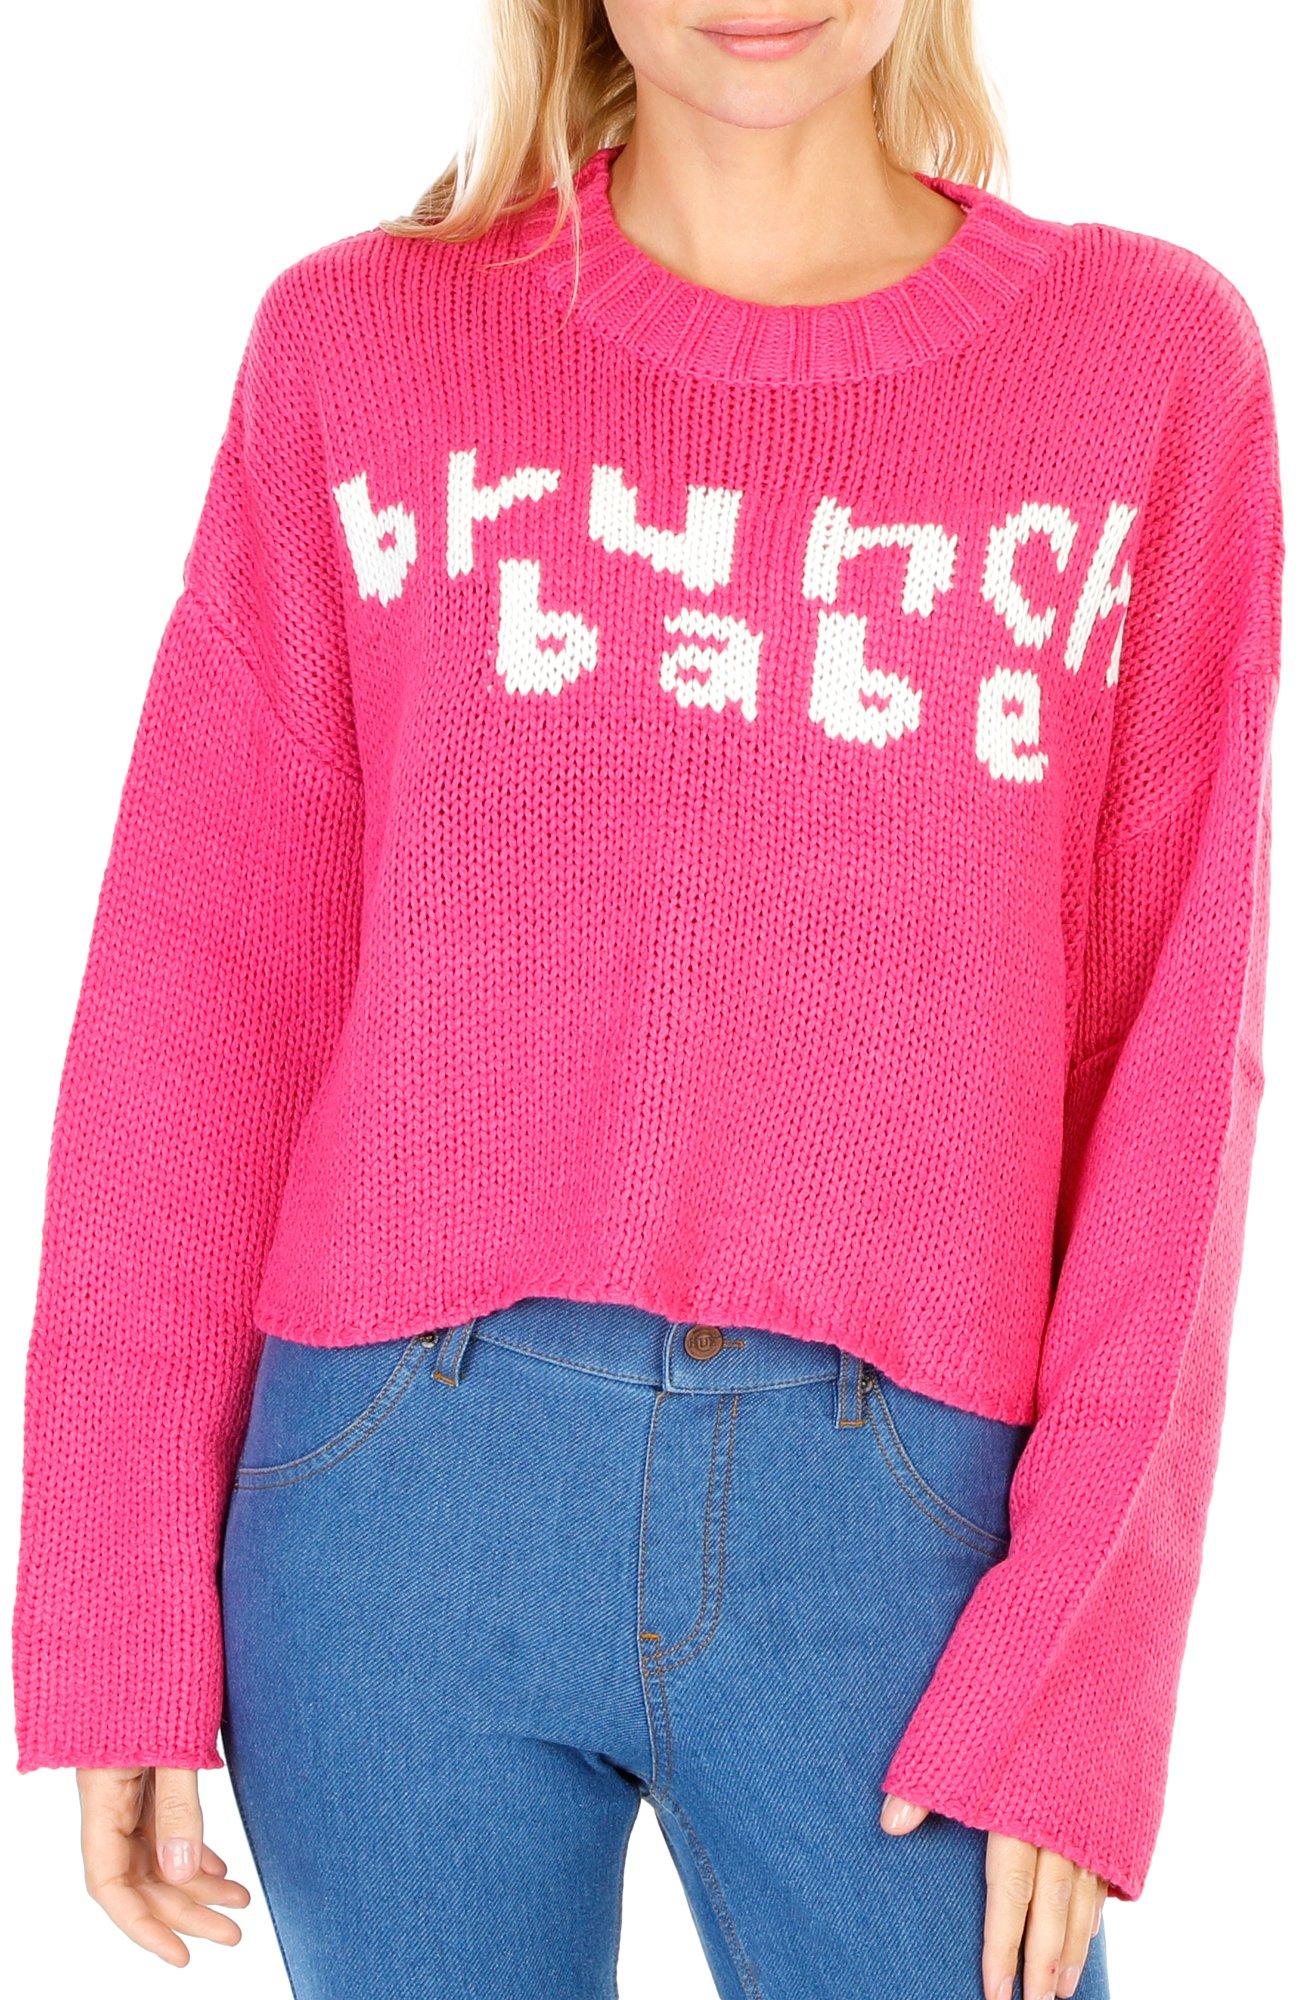 Juniors Brunch Babe Knit Sweater